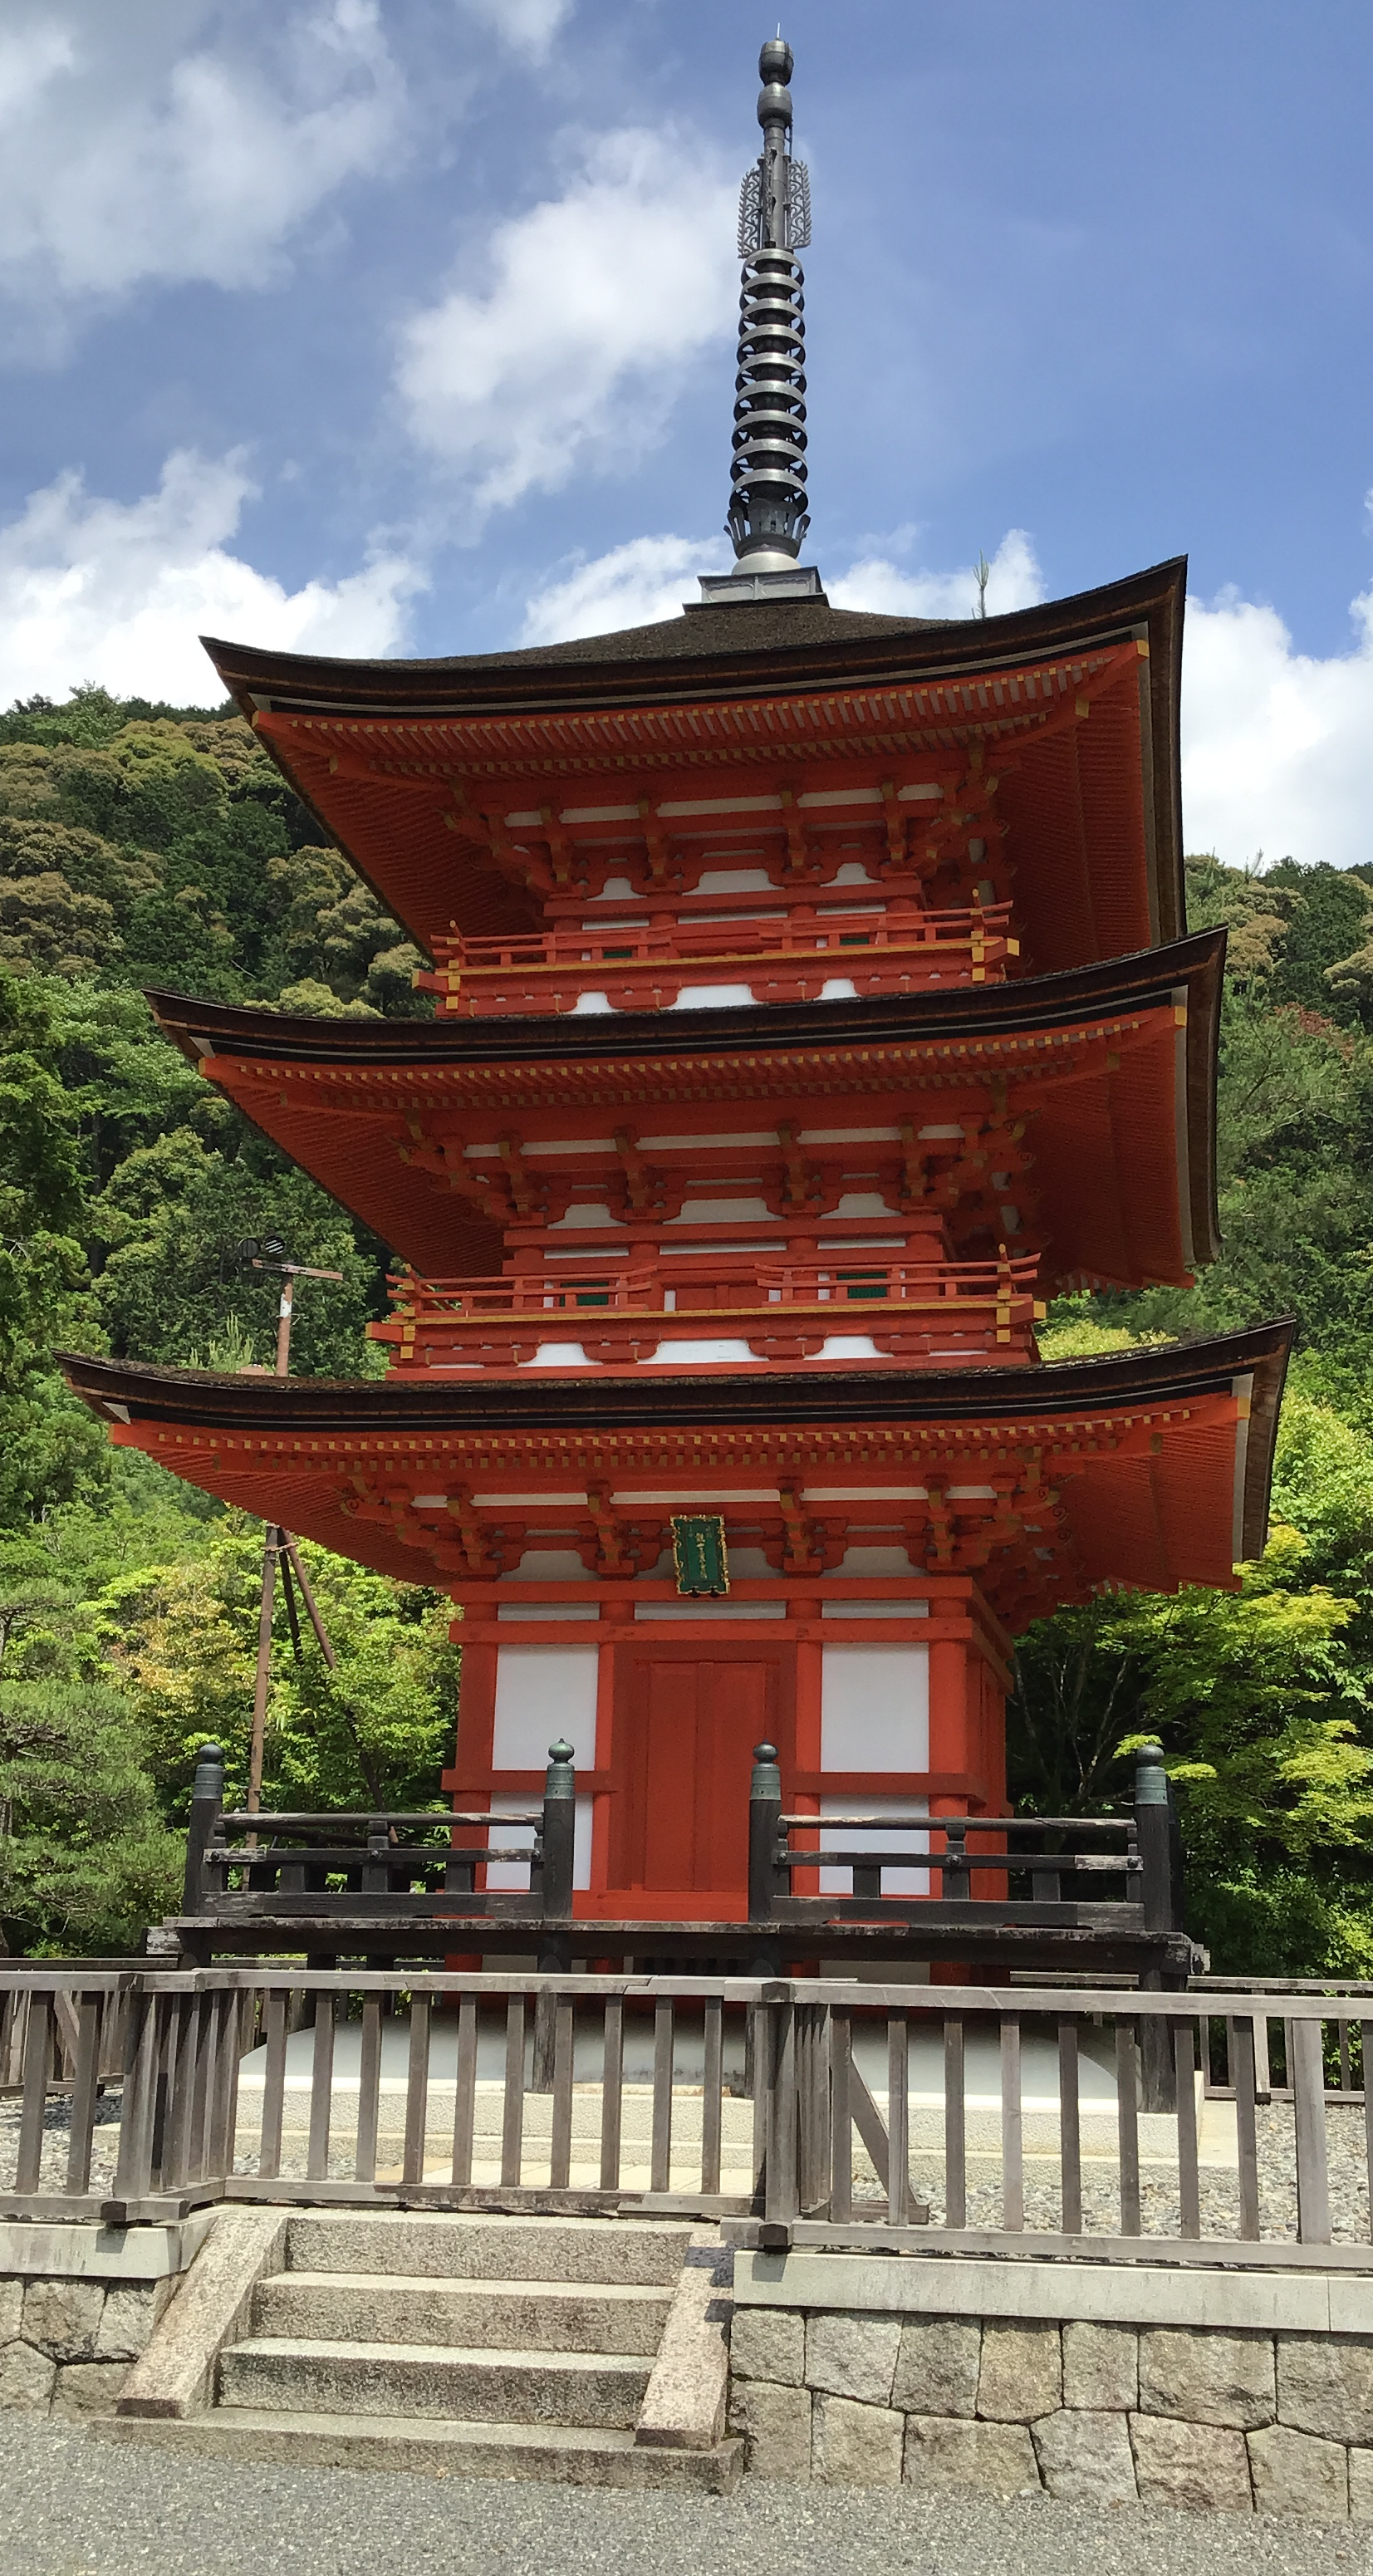 A red pagoda up close